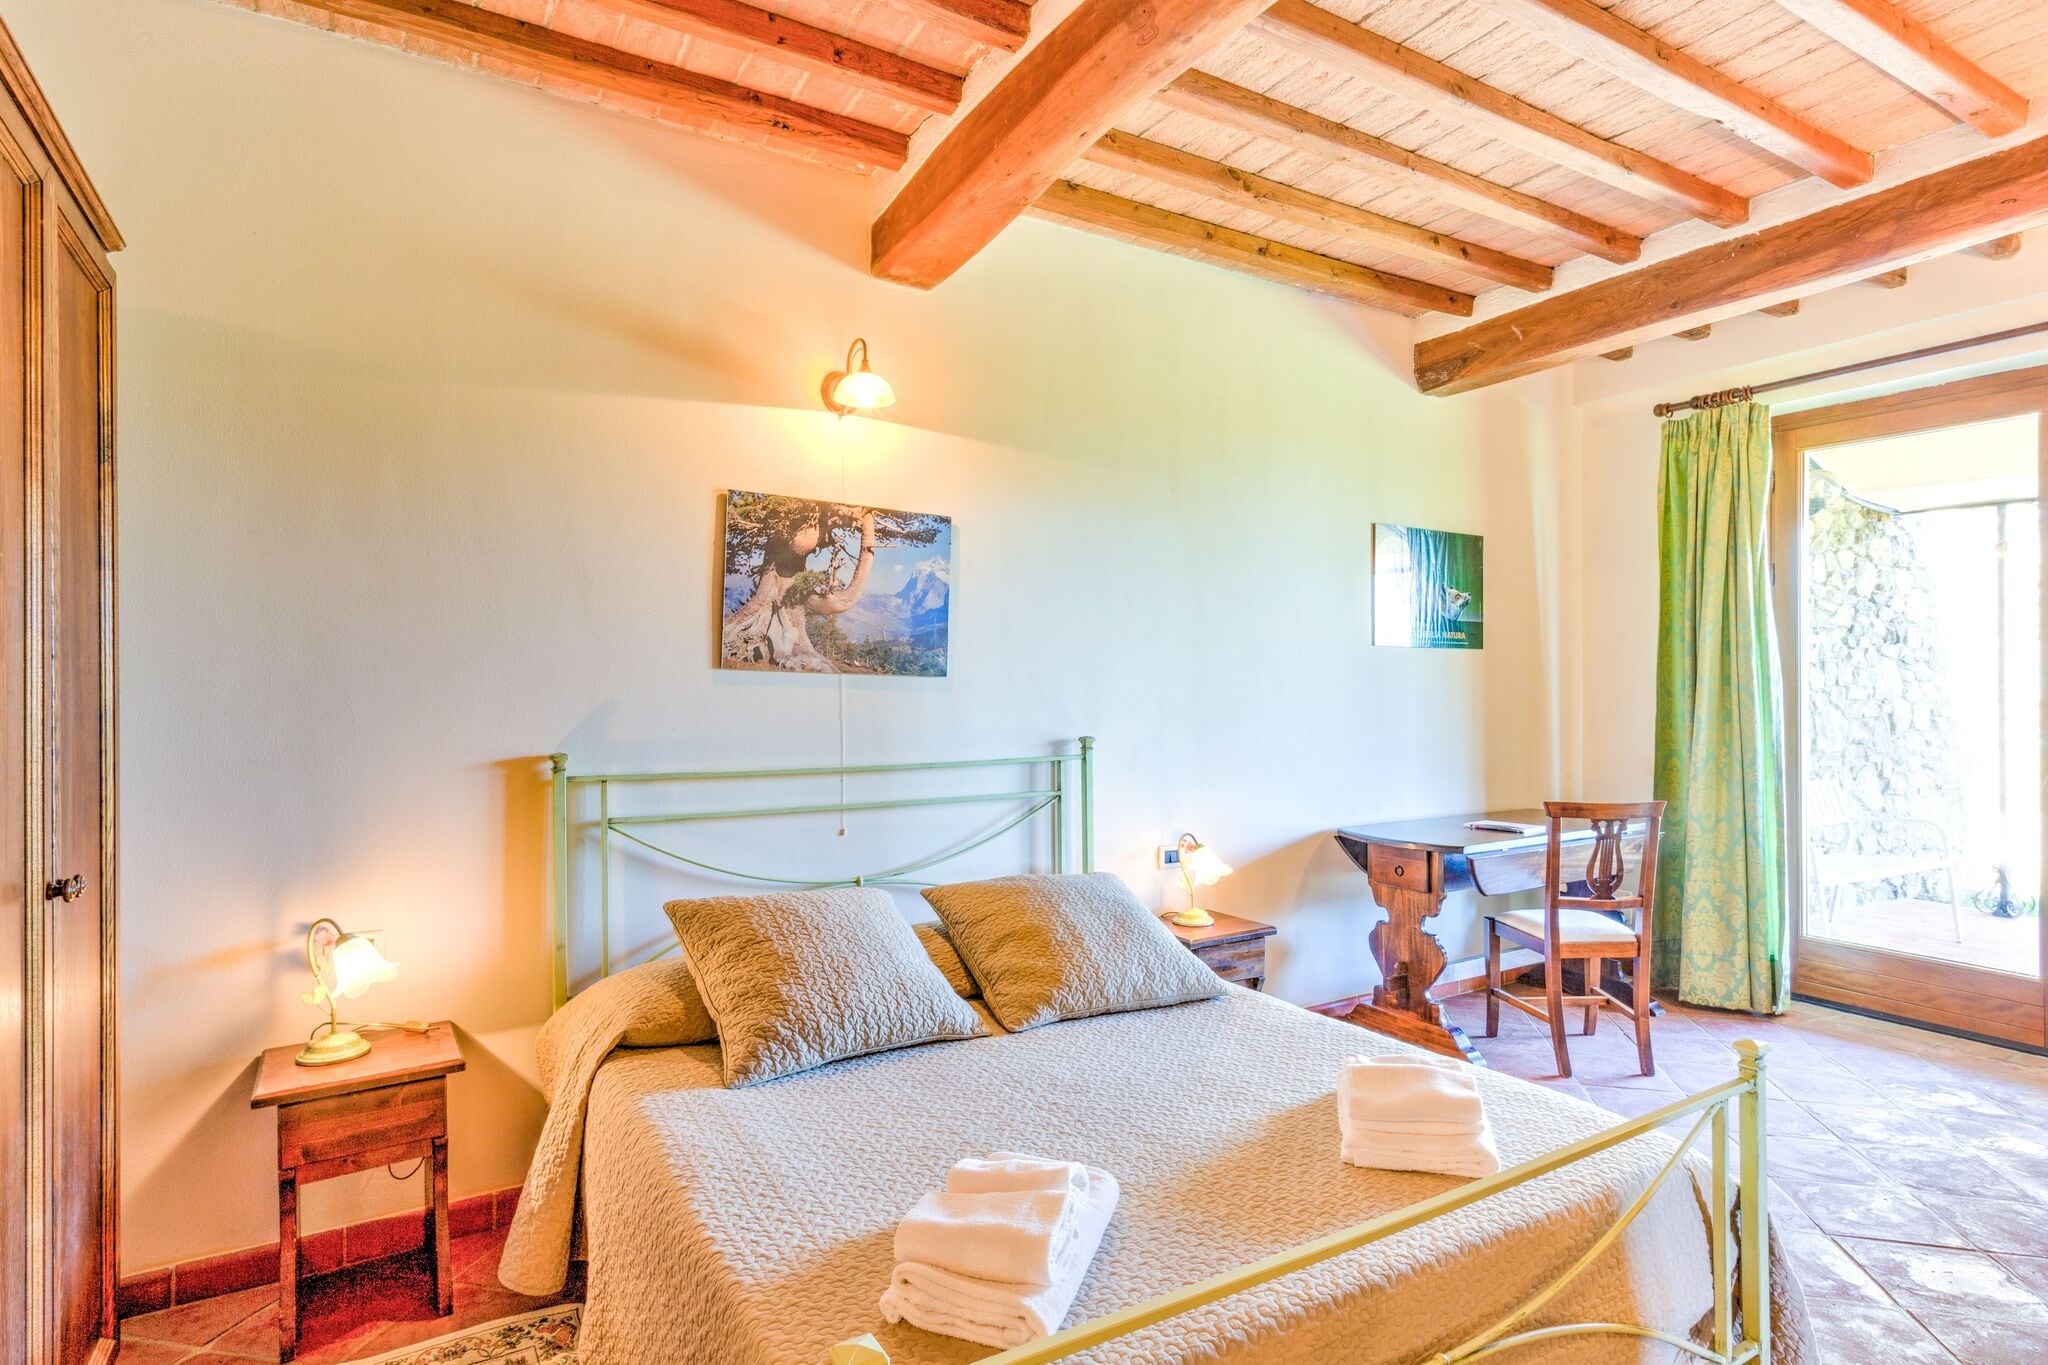 Privates Ferienhaus in Suvereto, Toskana mit Olivenbäumen